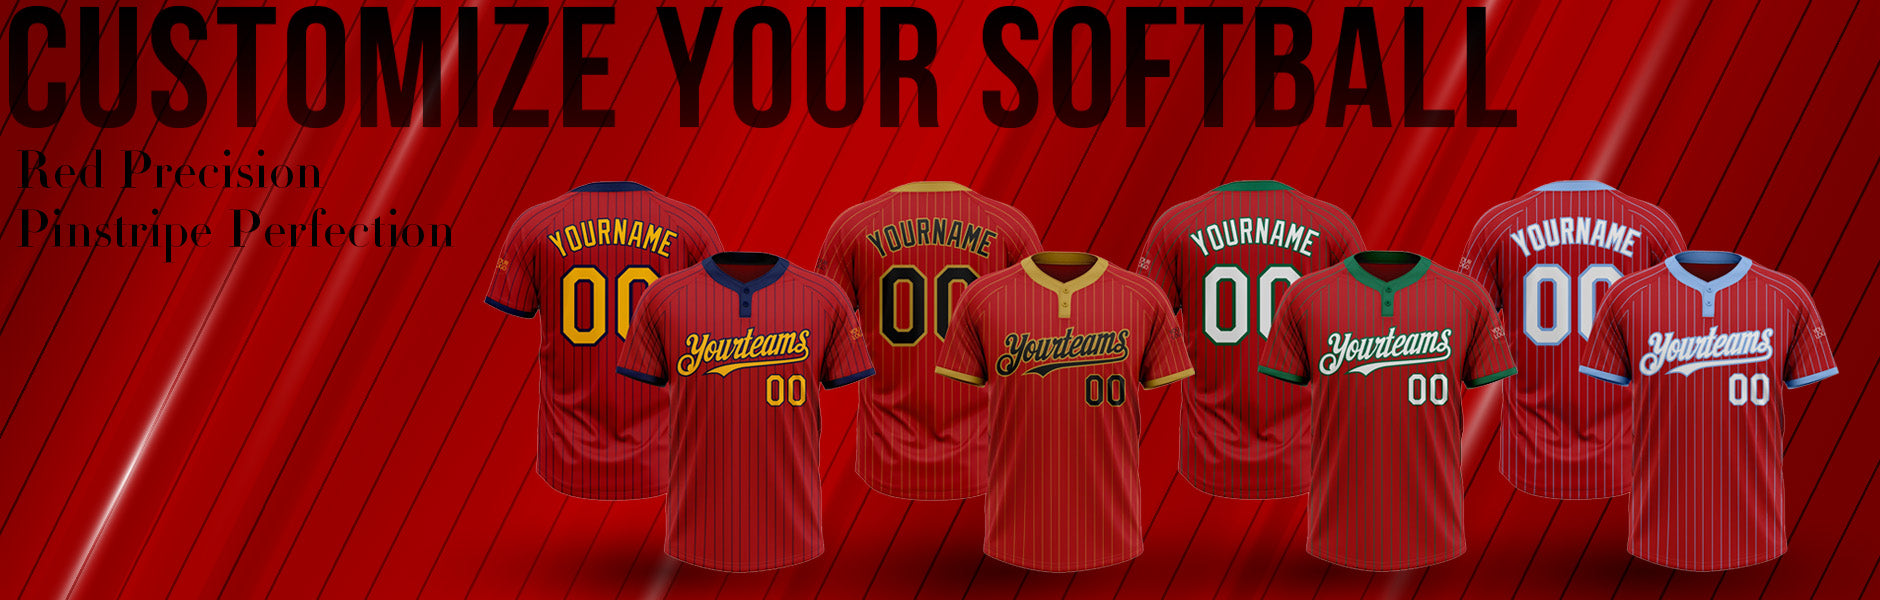 custom red pinstripe softball jersey